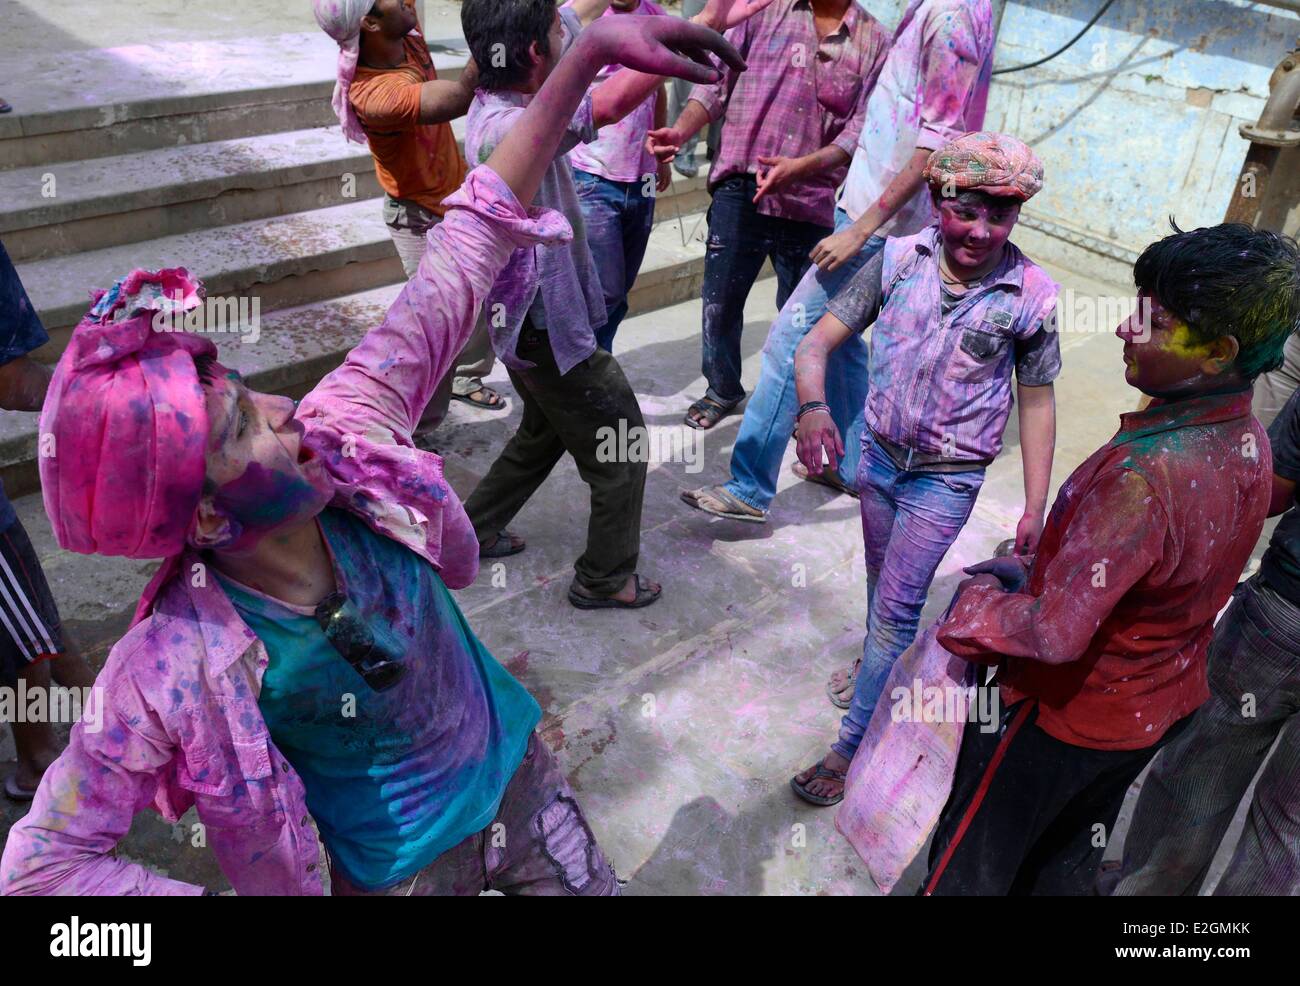 India Uttar Pradesh State Mathura young boys throws coloured powder during Holi festival celebrations Stock Photo